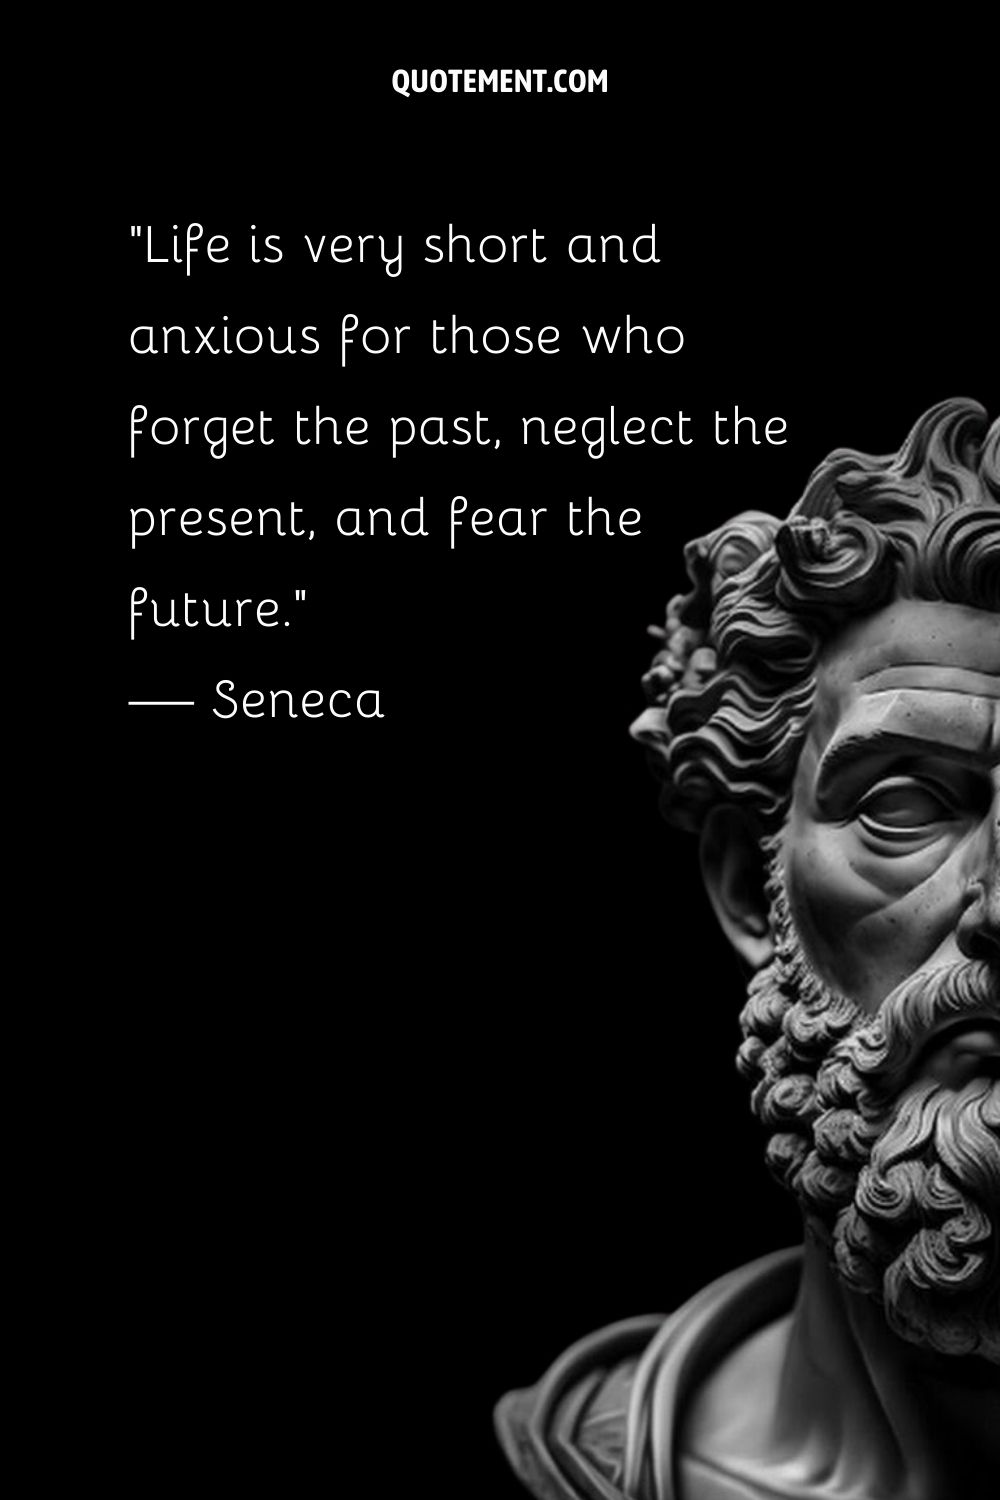 Stoic Seneca captured in enduring stone.